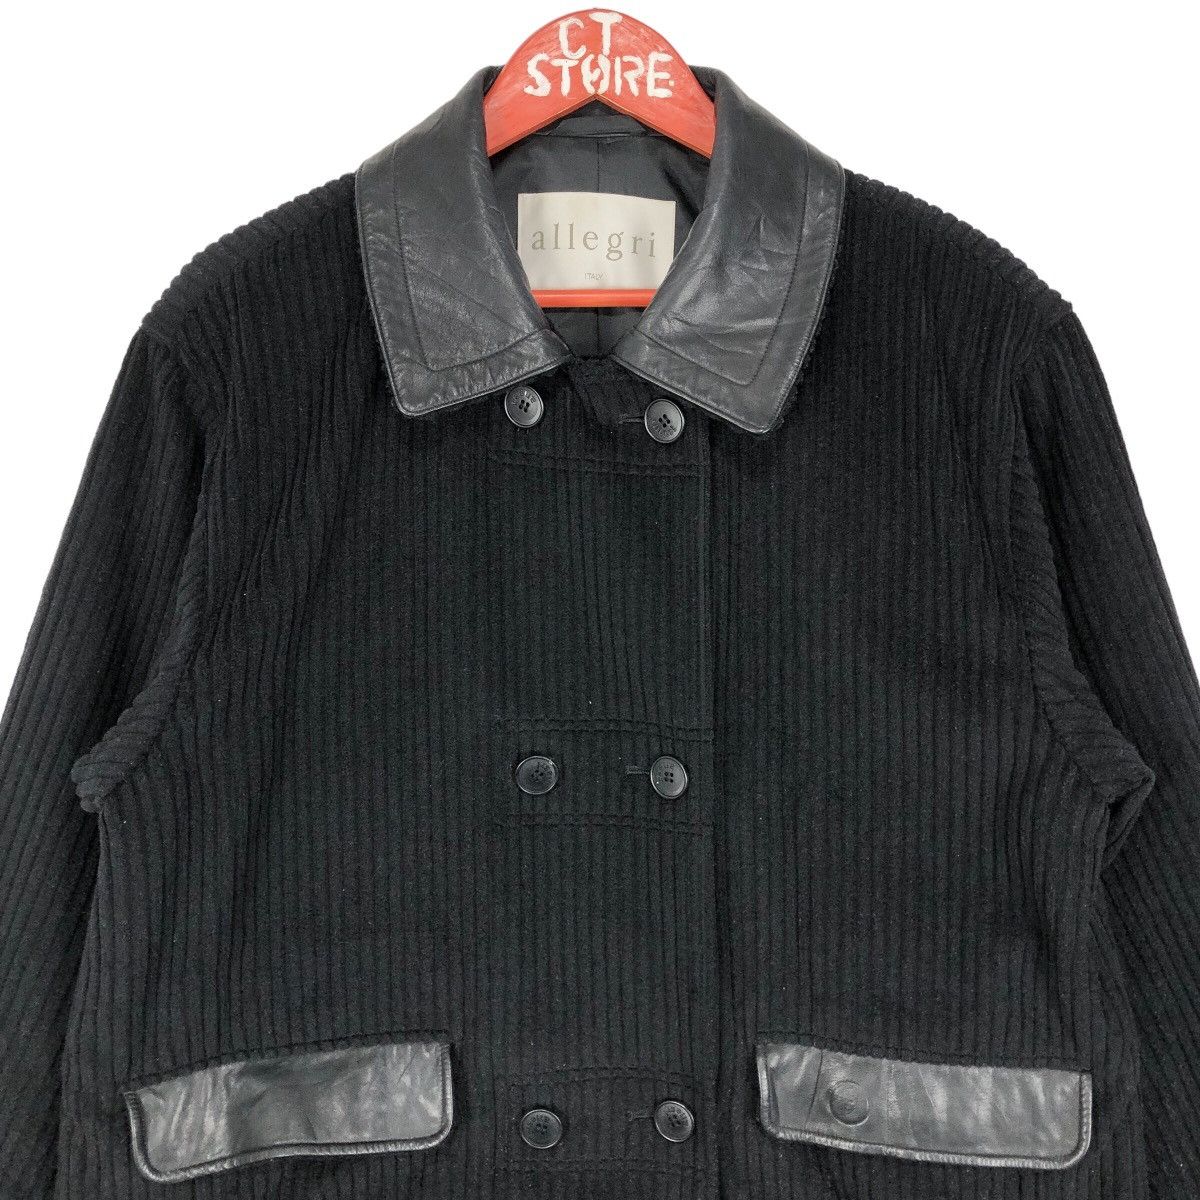 Vintage Allergri Italy Wool Coat Jacket Size L - 4